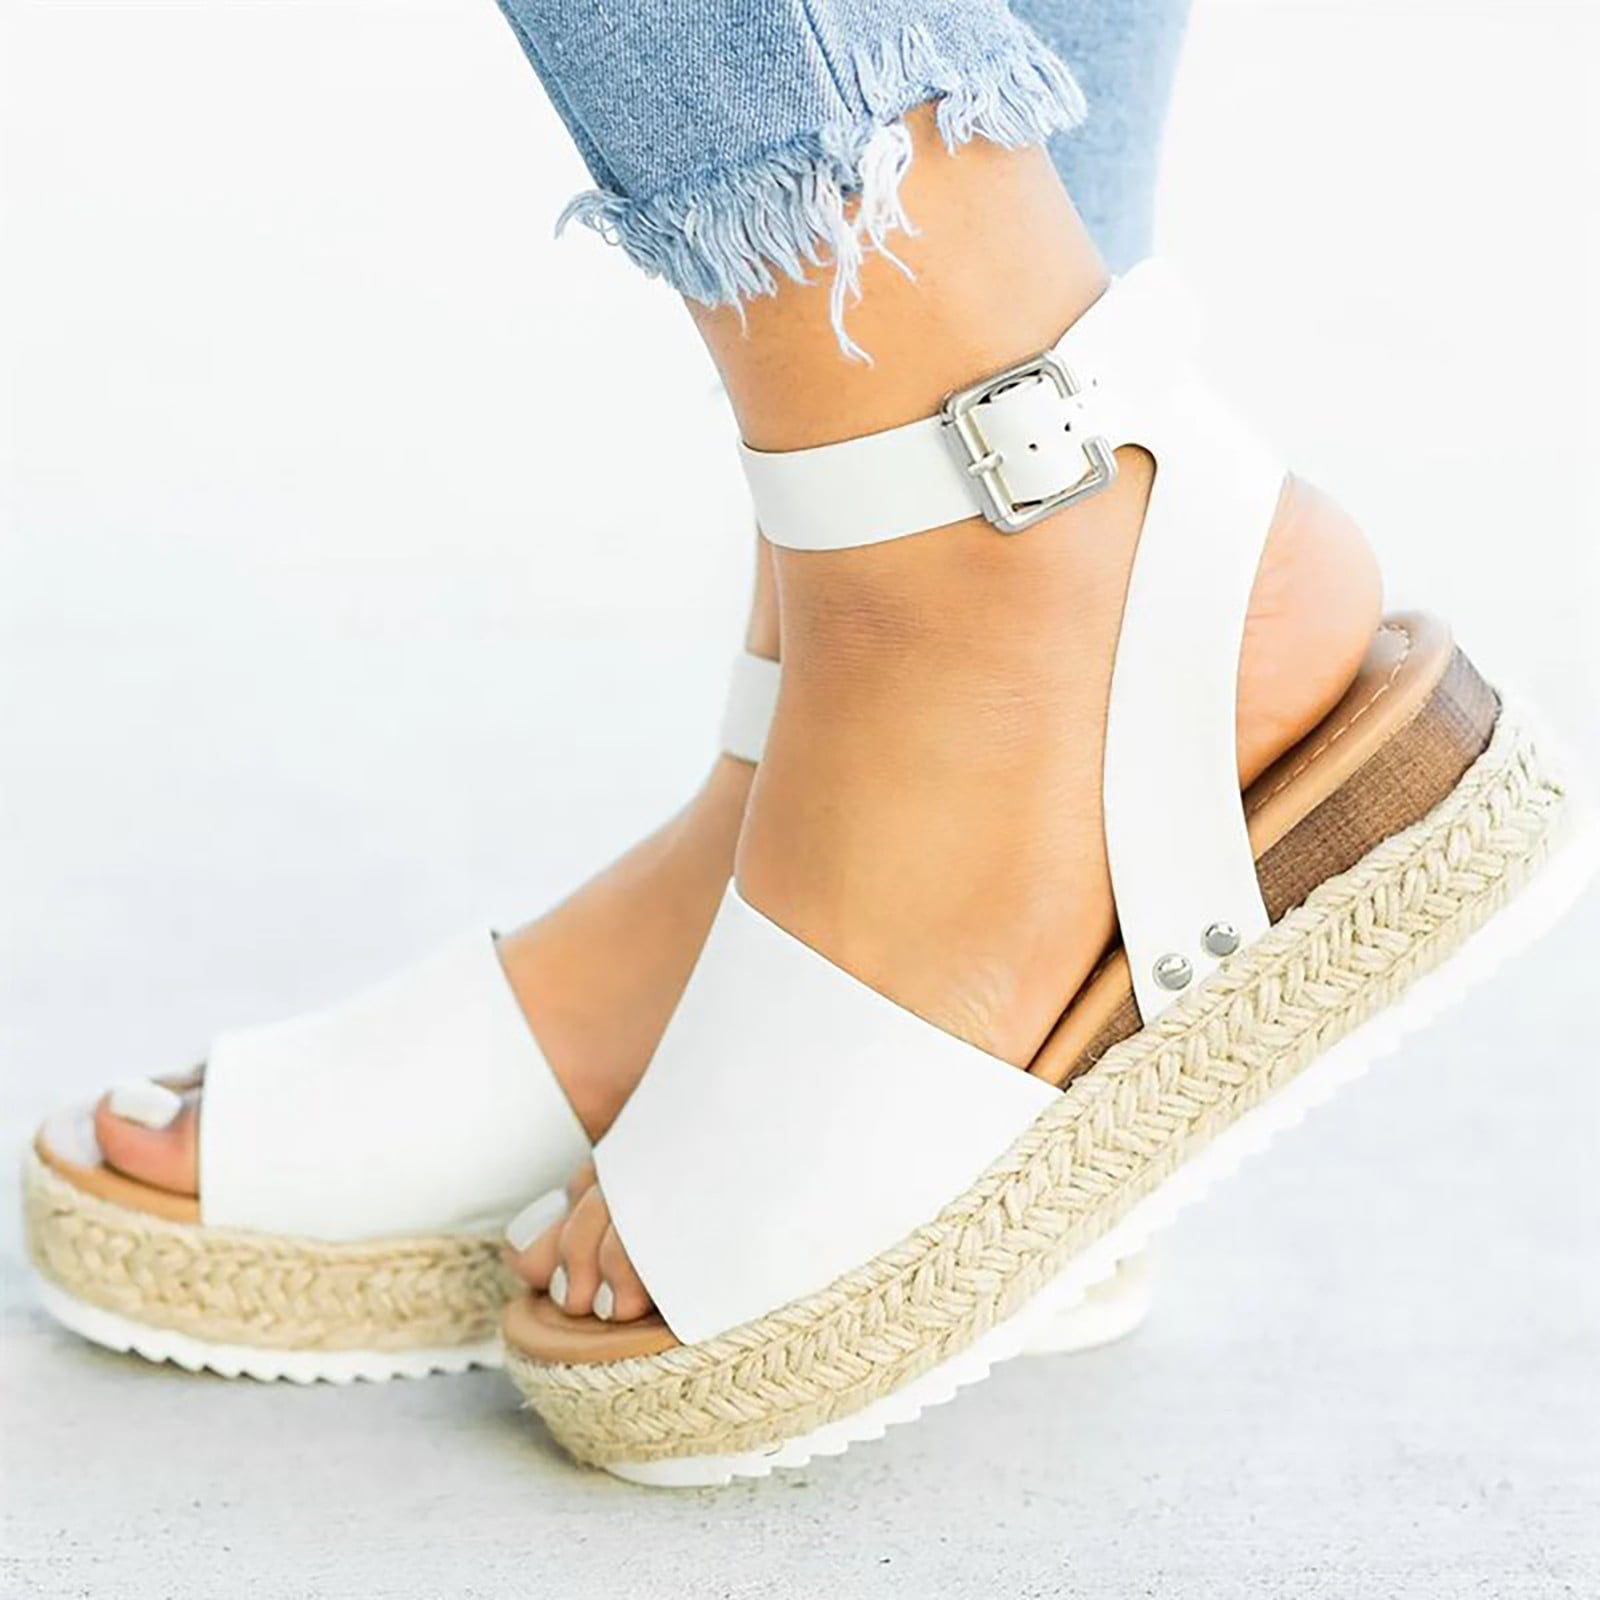 Shoes Sandals Platform Sandals Burberry Platform Sandals cream-natural white casual look 